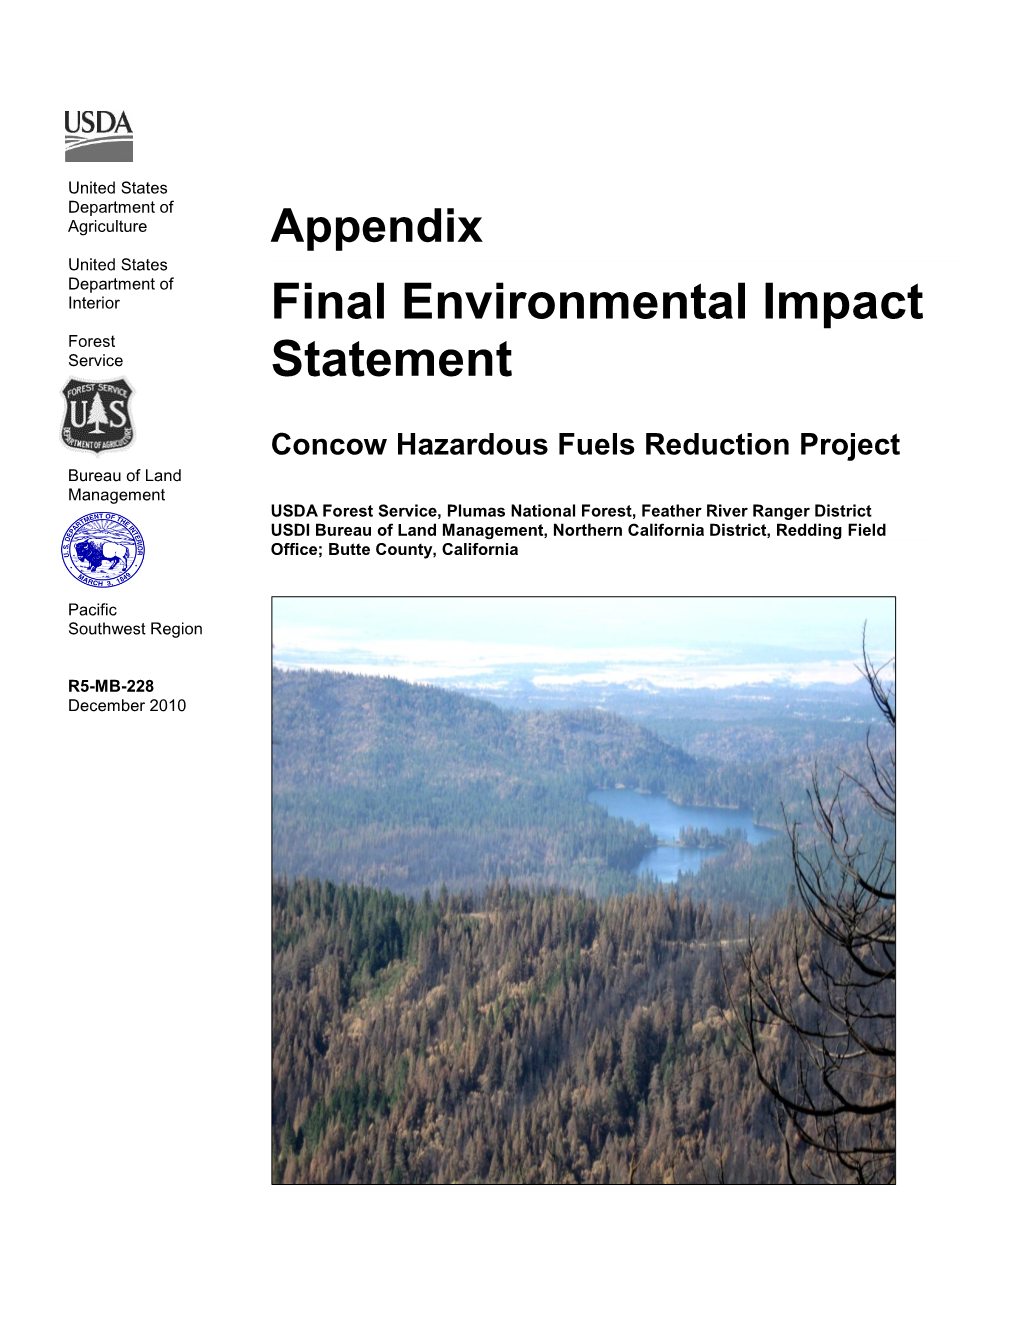 Final Environmental Impact Statement